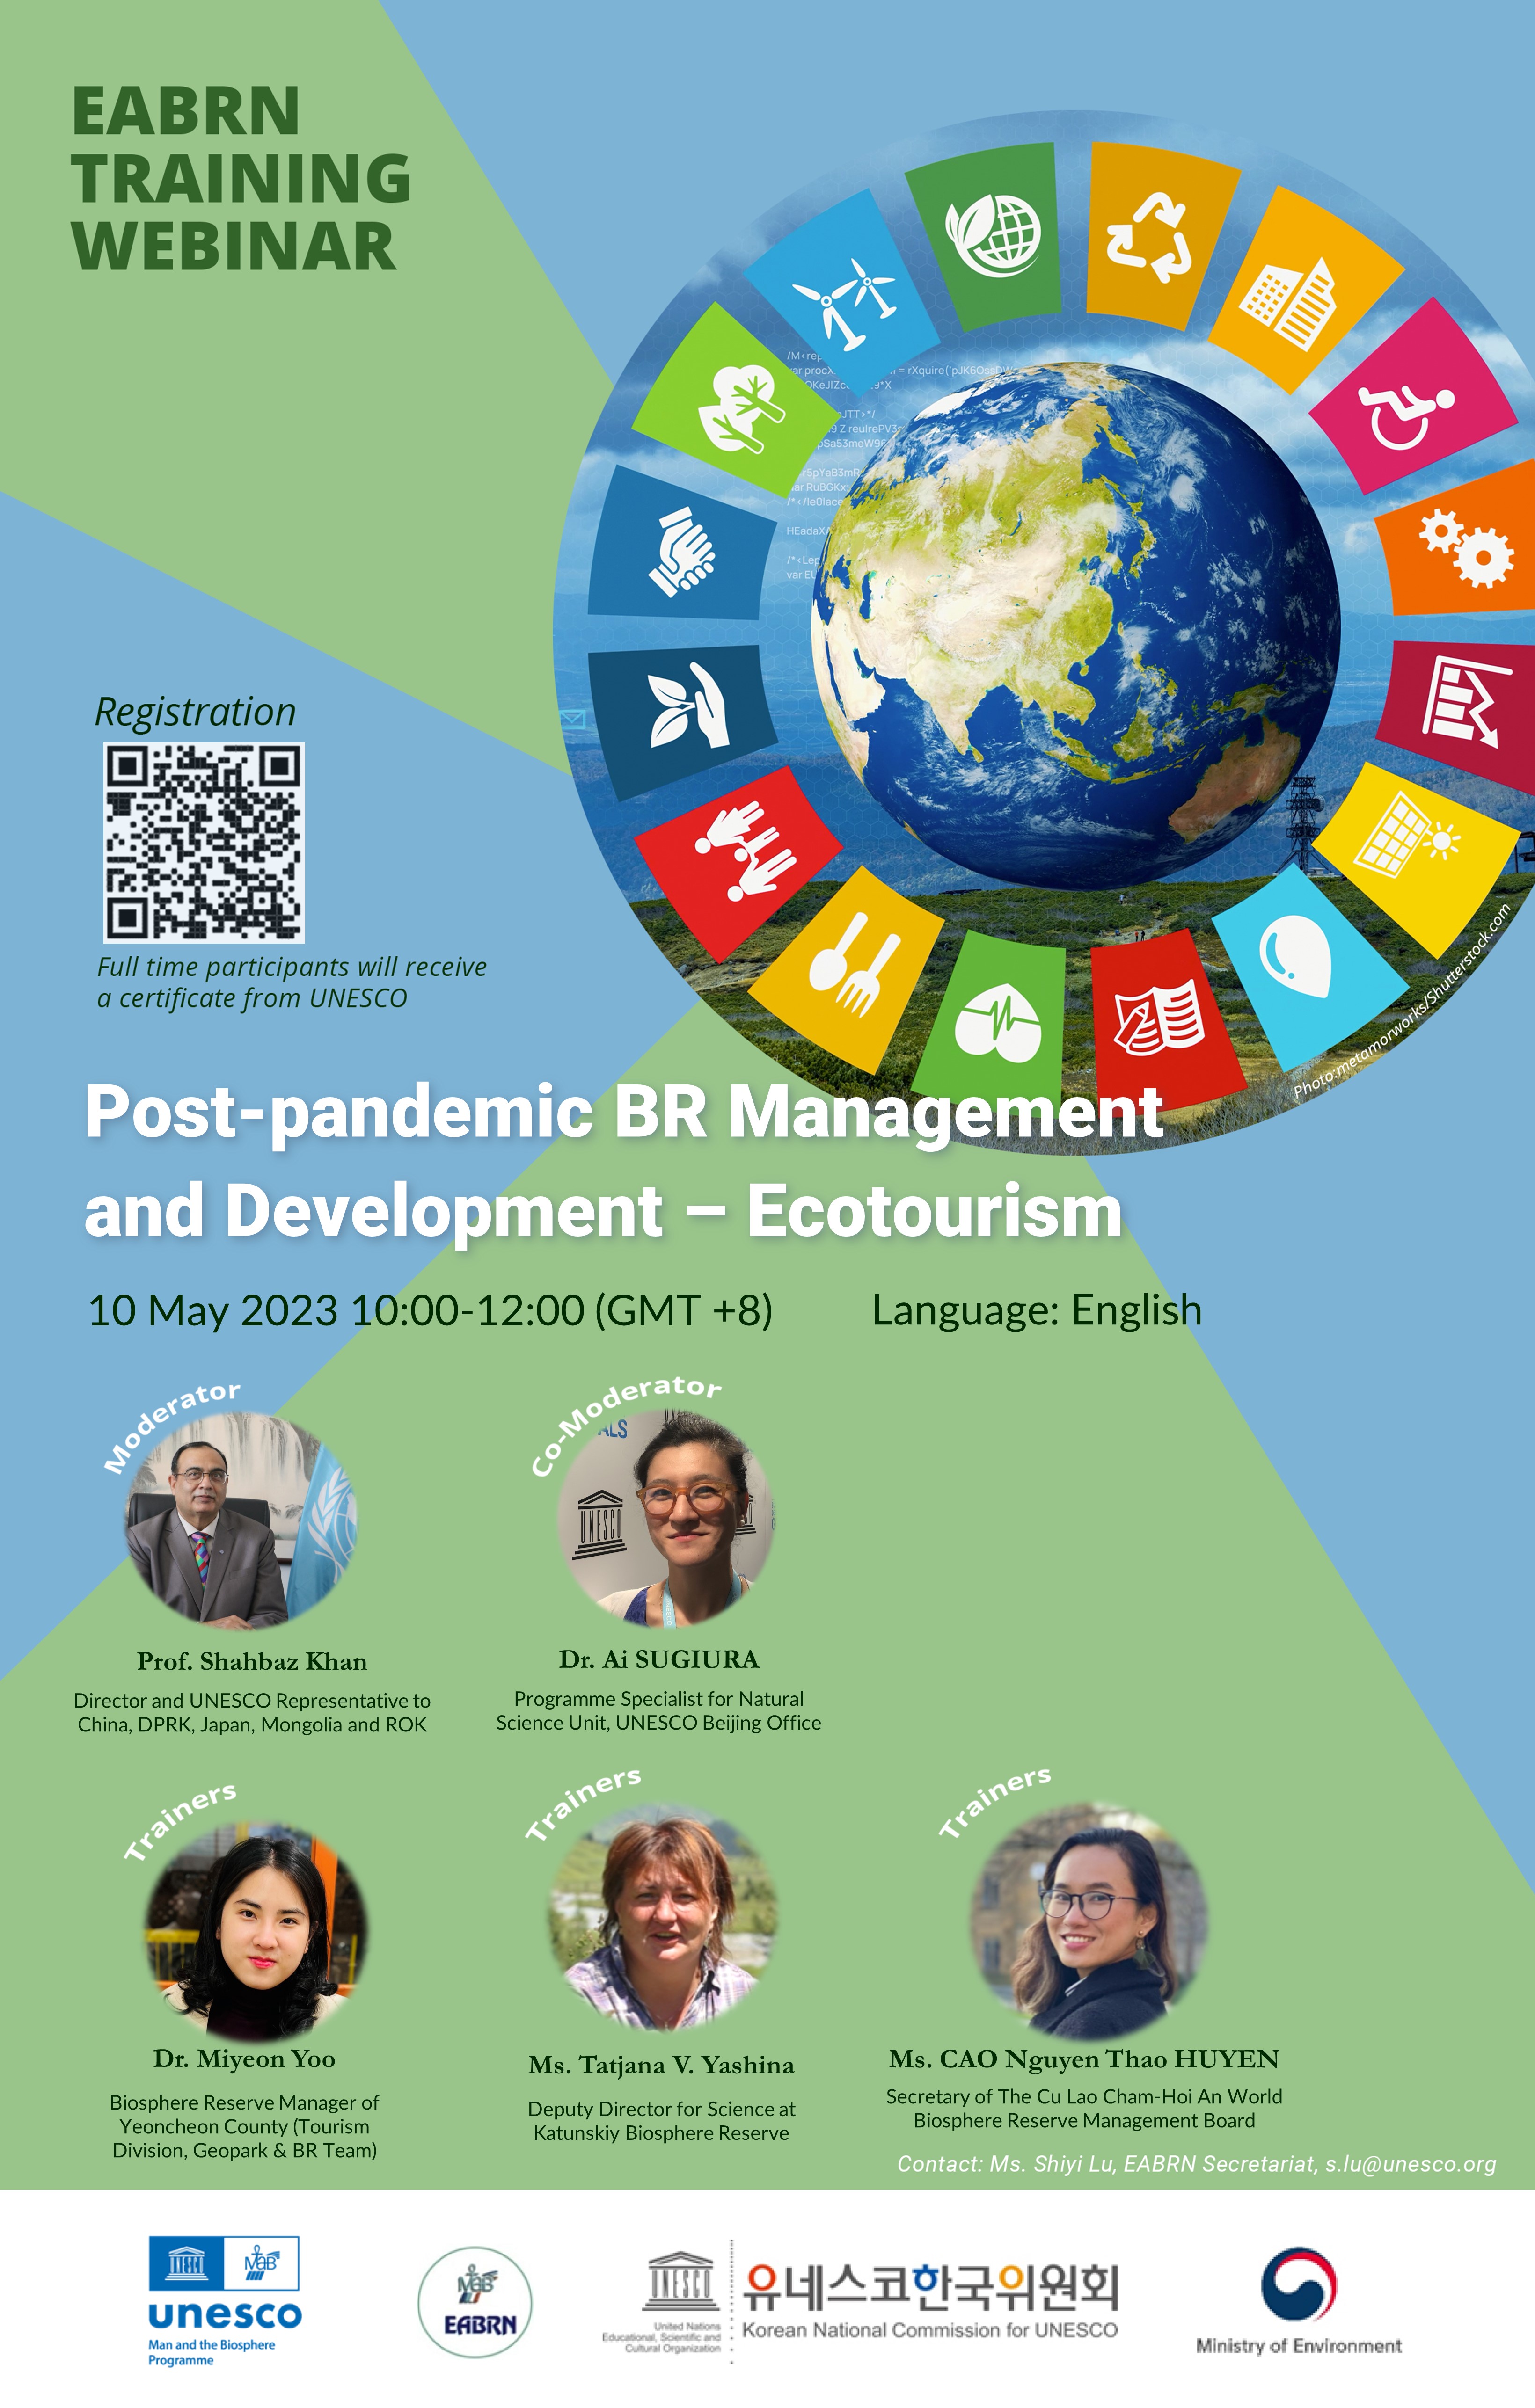 [EABRN Webinar] Post-pandemic BR Management and Development – Ecotourism image 1